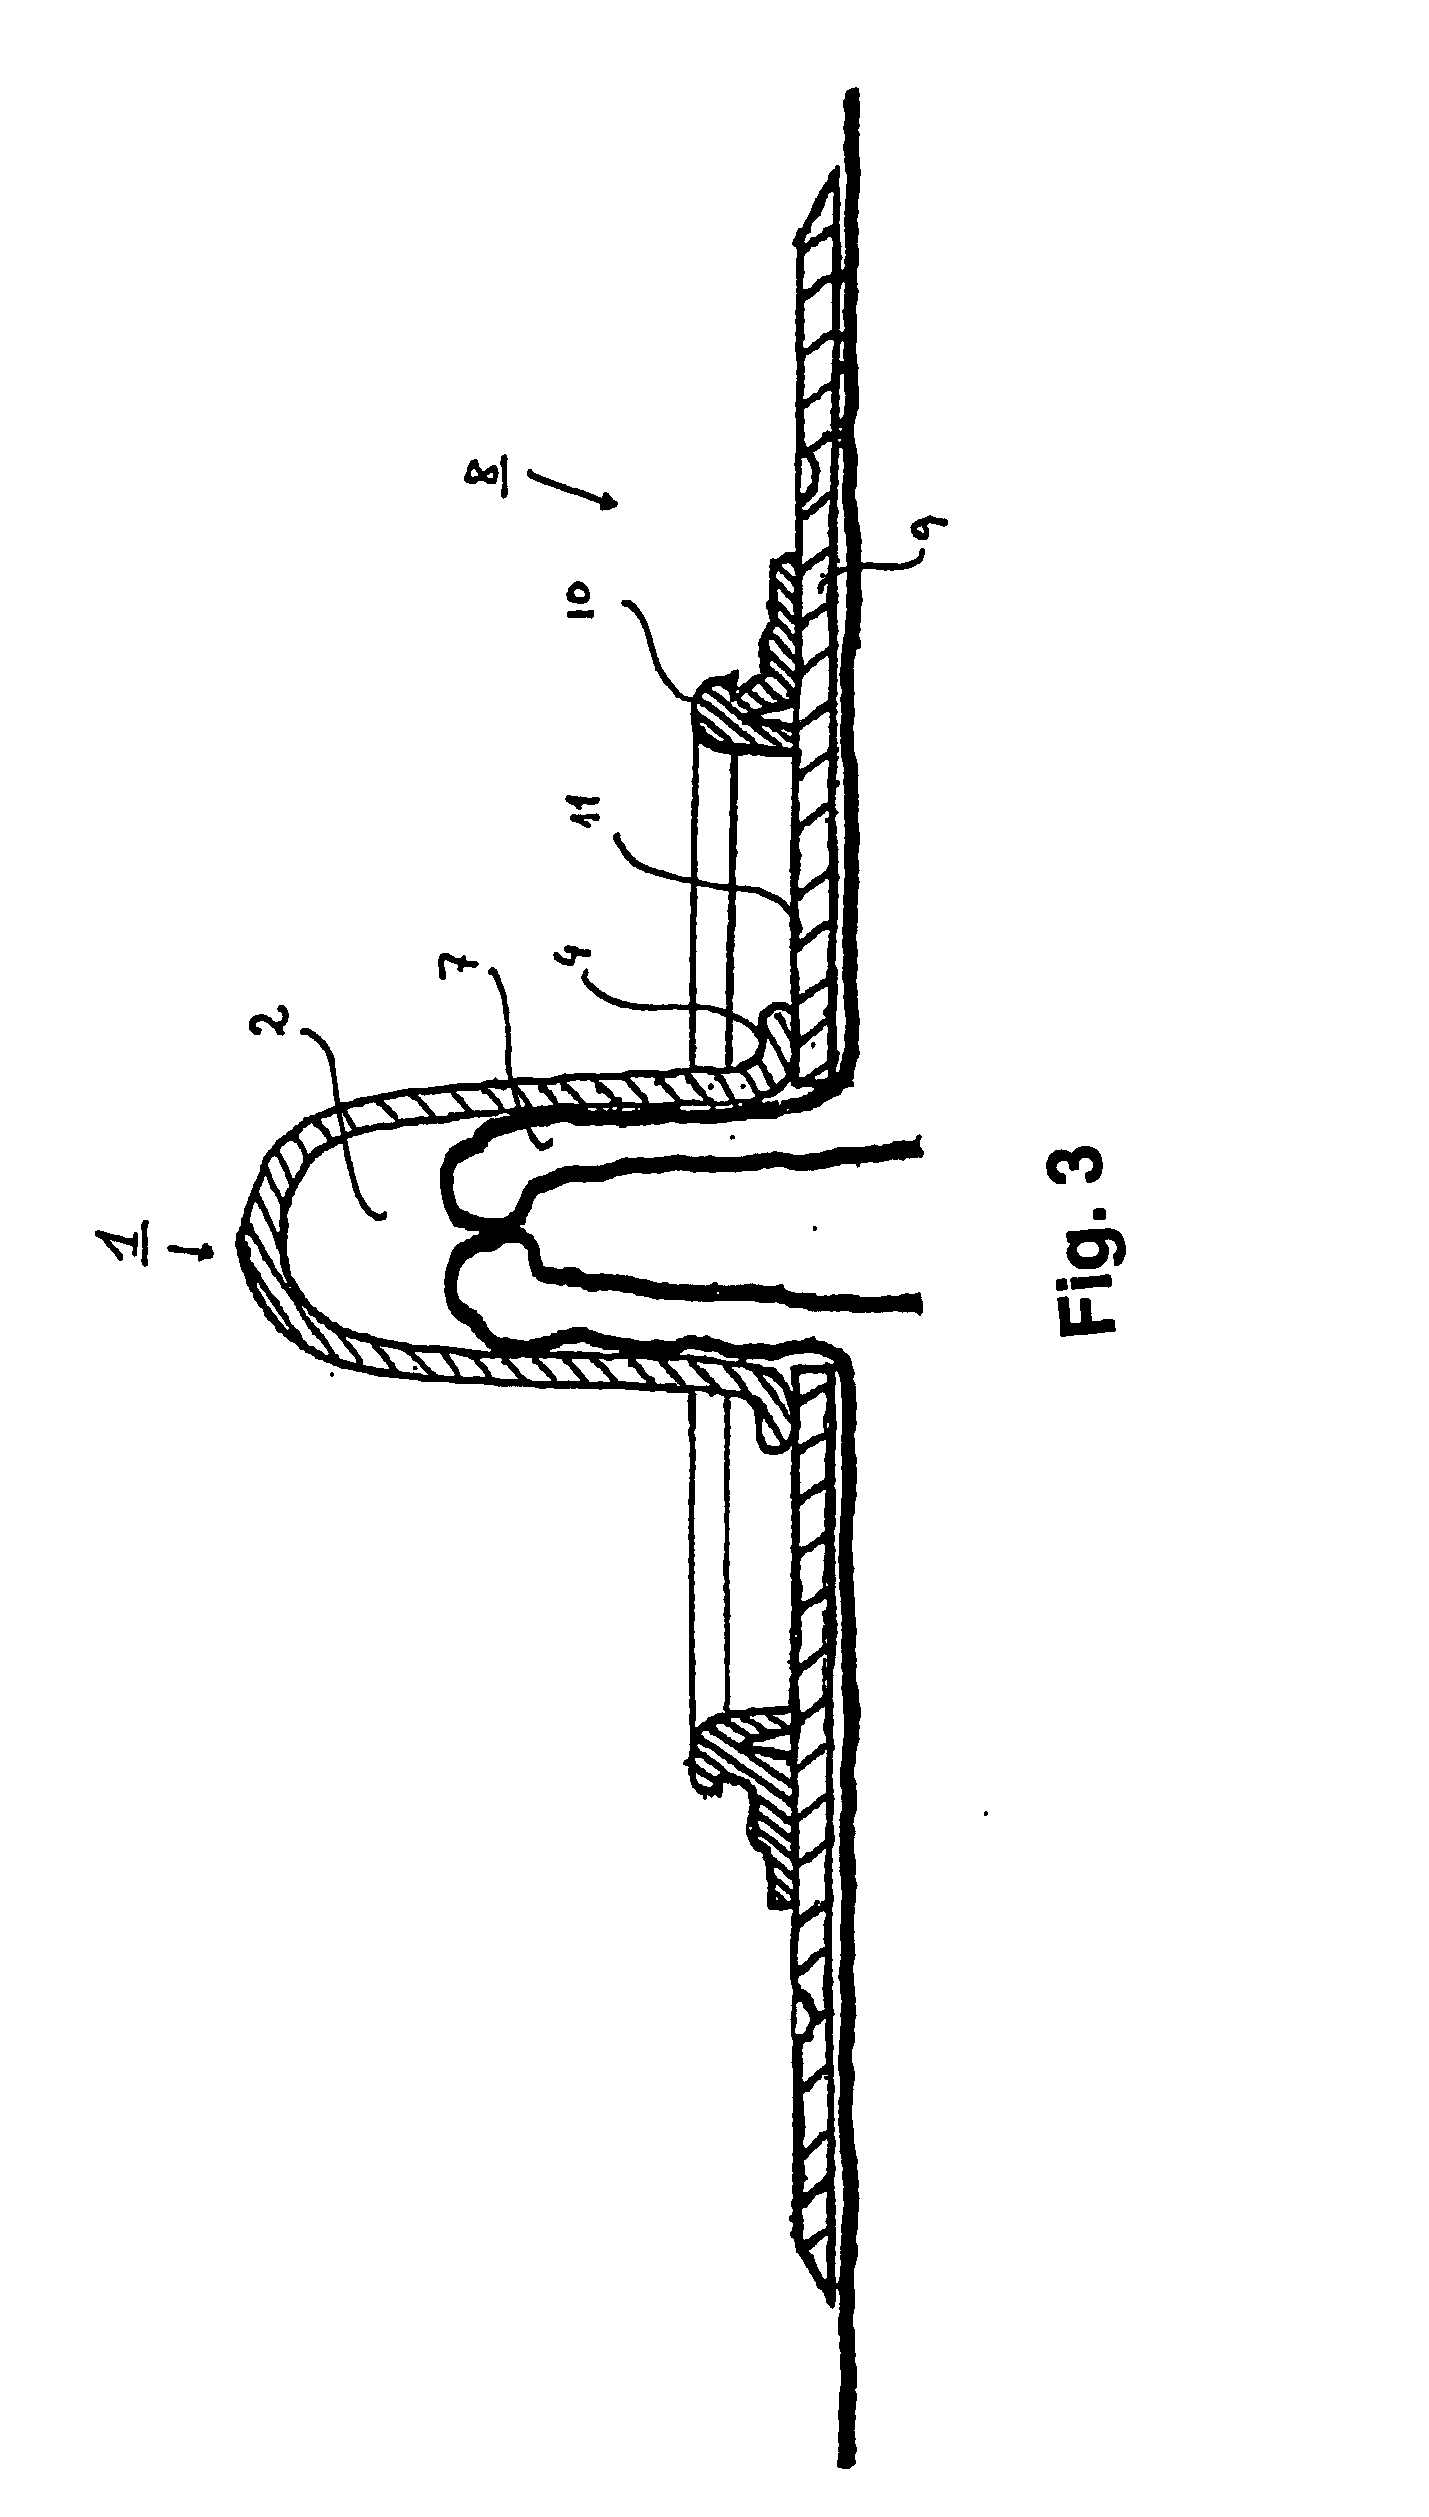 Ostomy sealing device